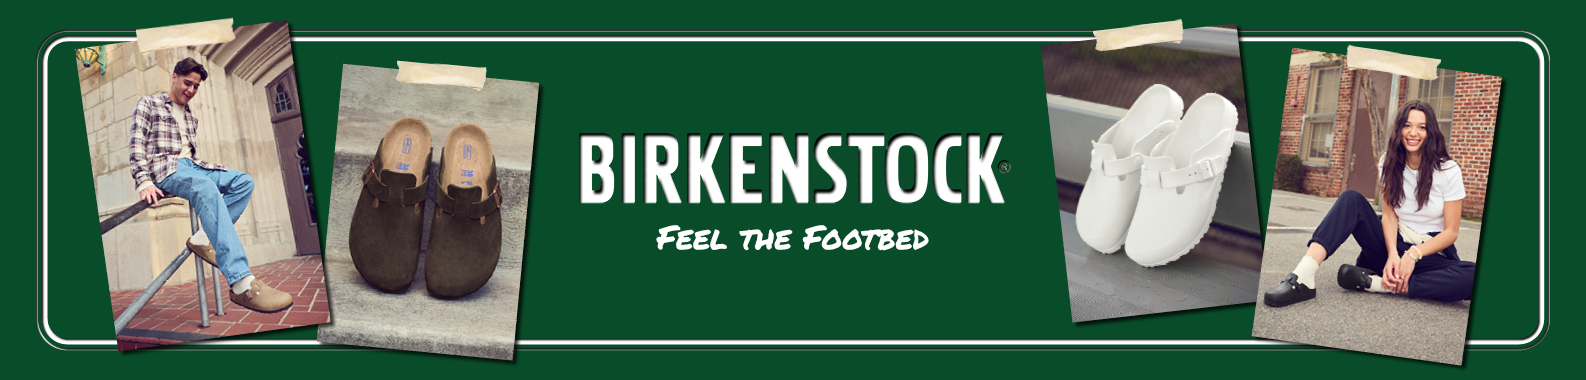 Birkenstock brand header image